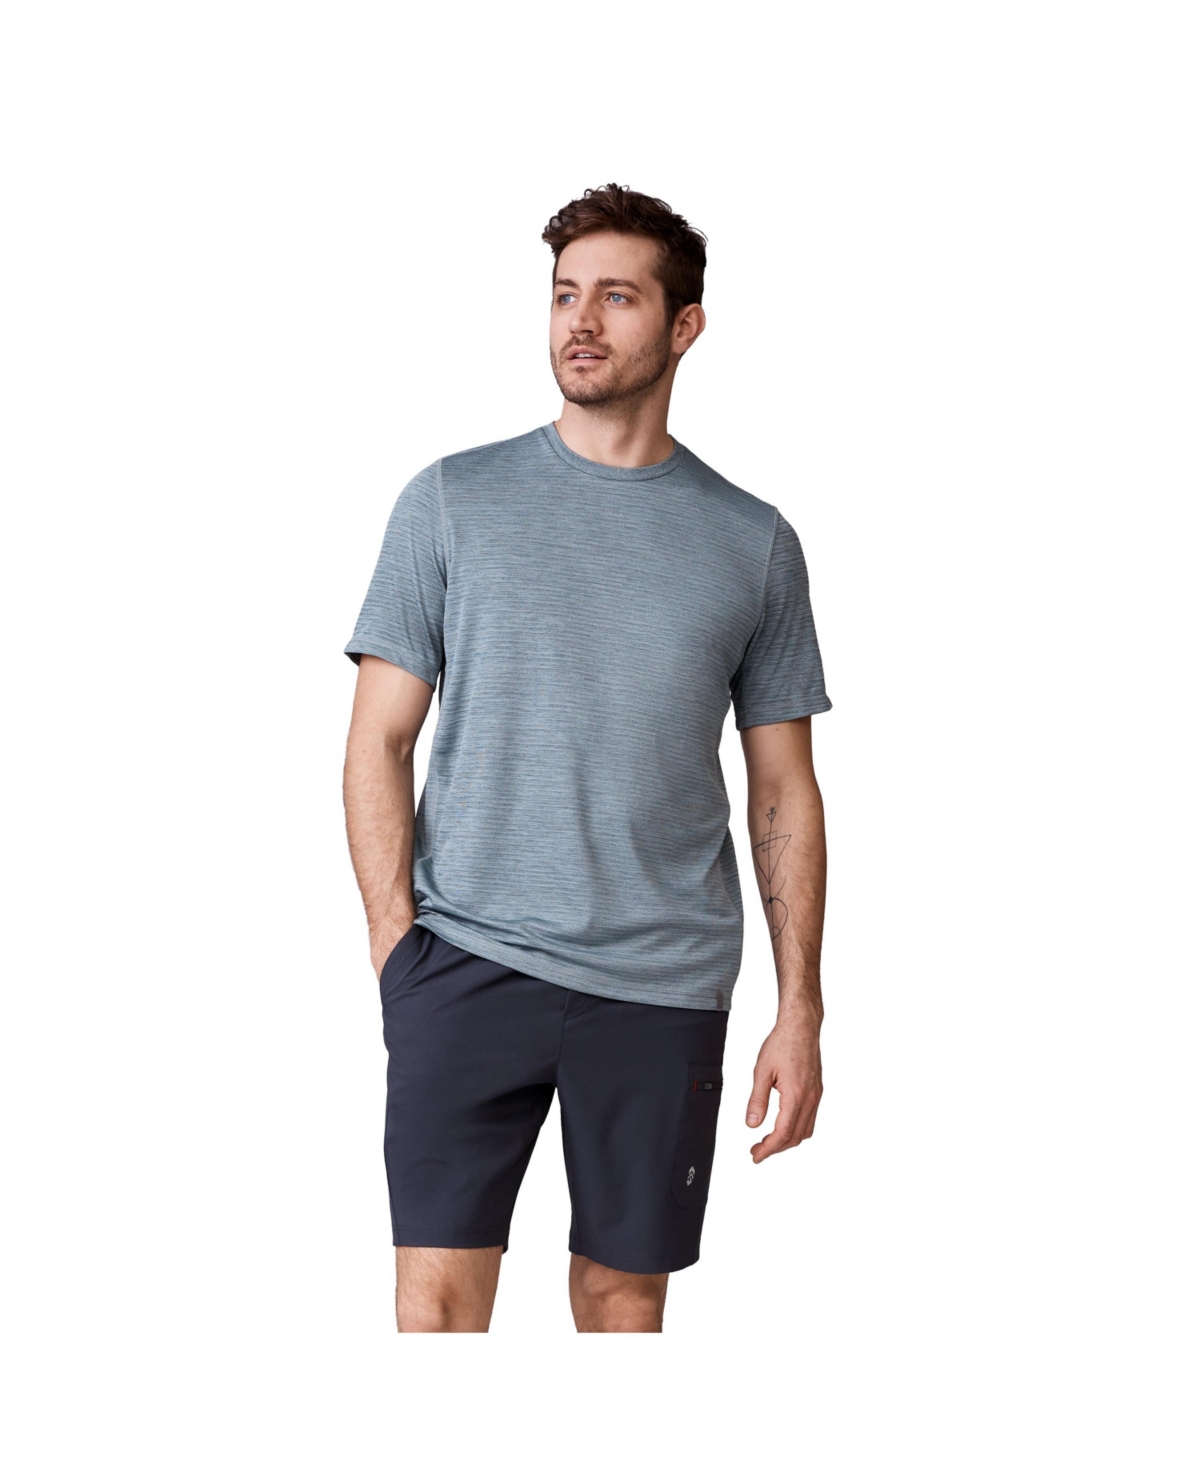 Men's Tech Jacquard Short Sleeve Crew Neck T-Shirt - Stormy weather